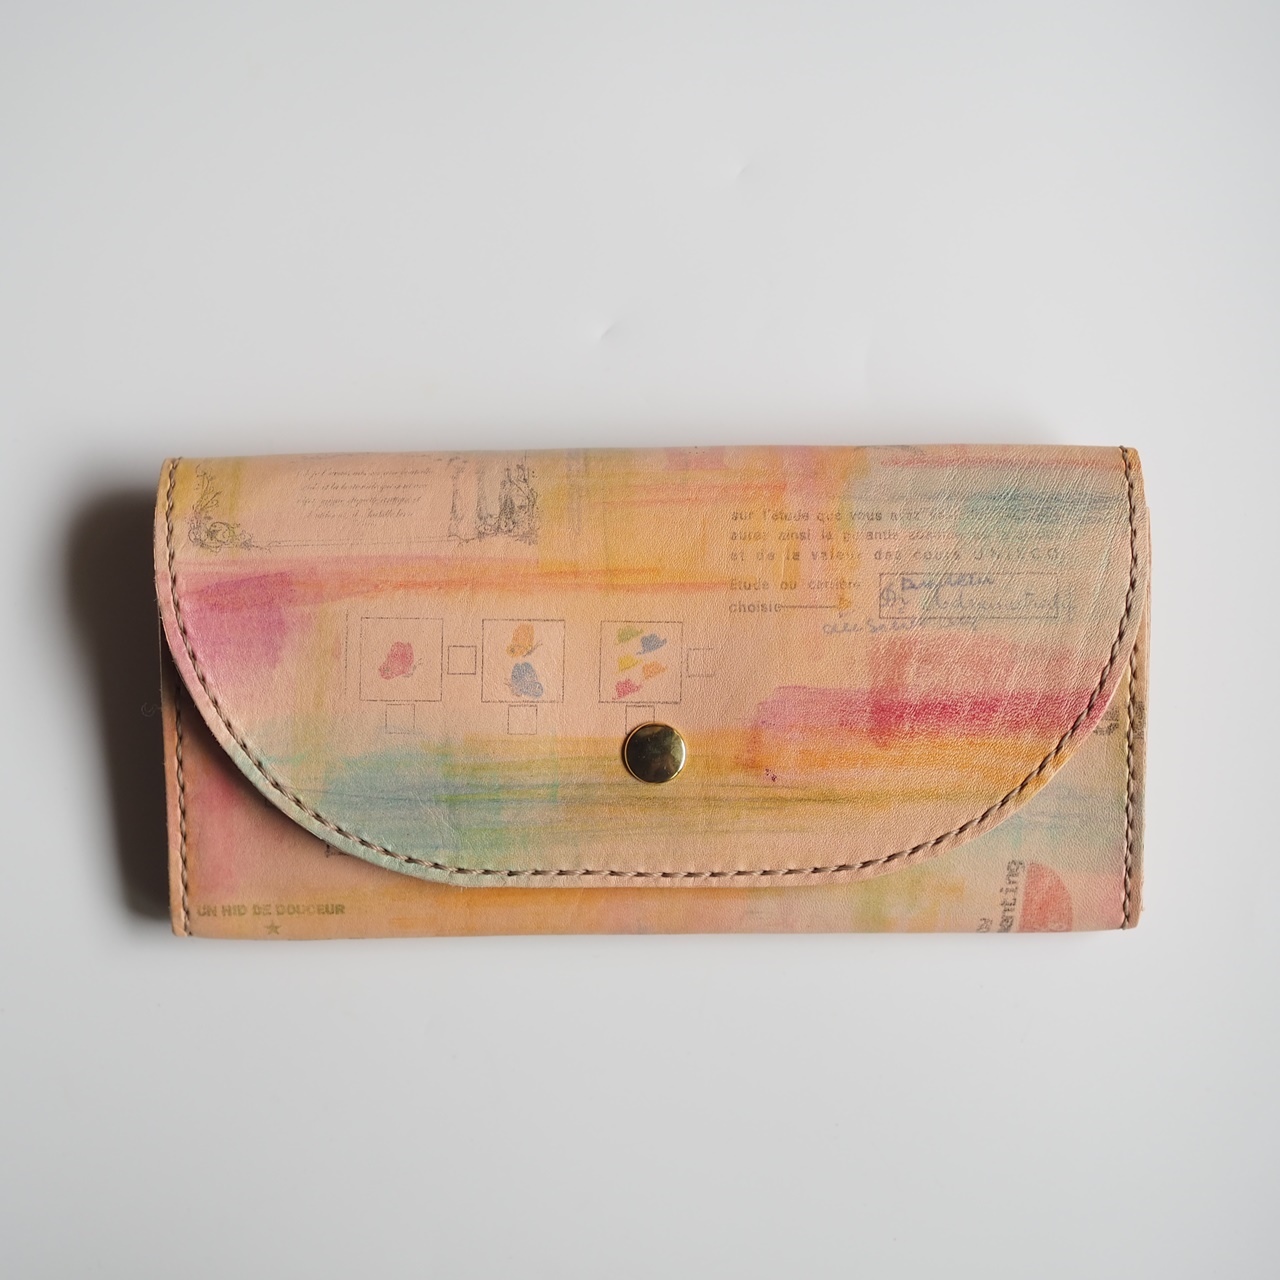 RAKUGAKIという名前の長財布